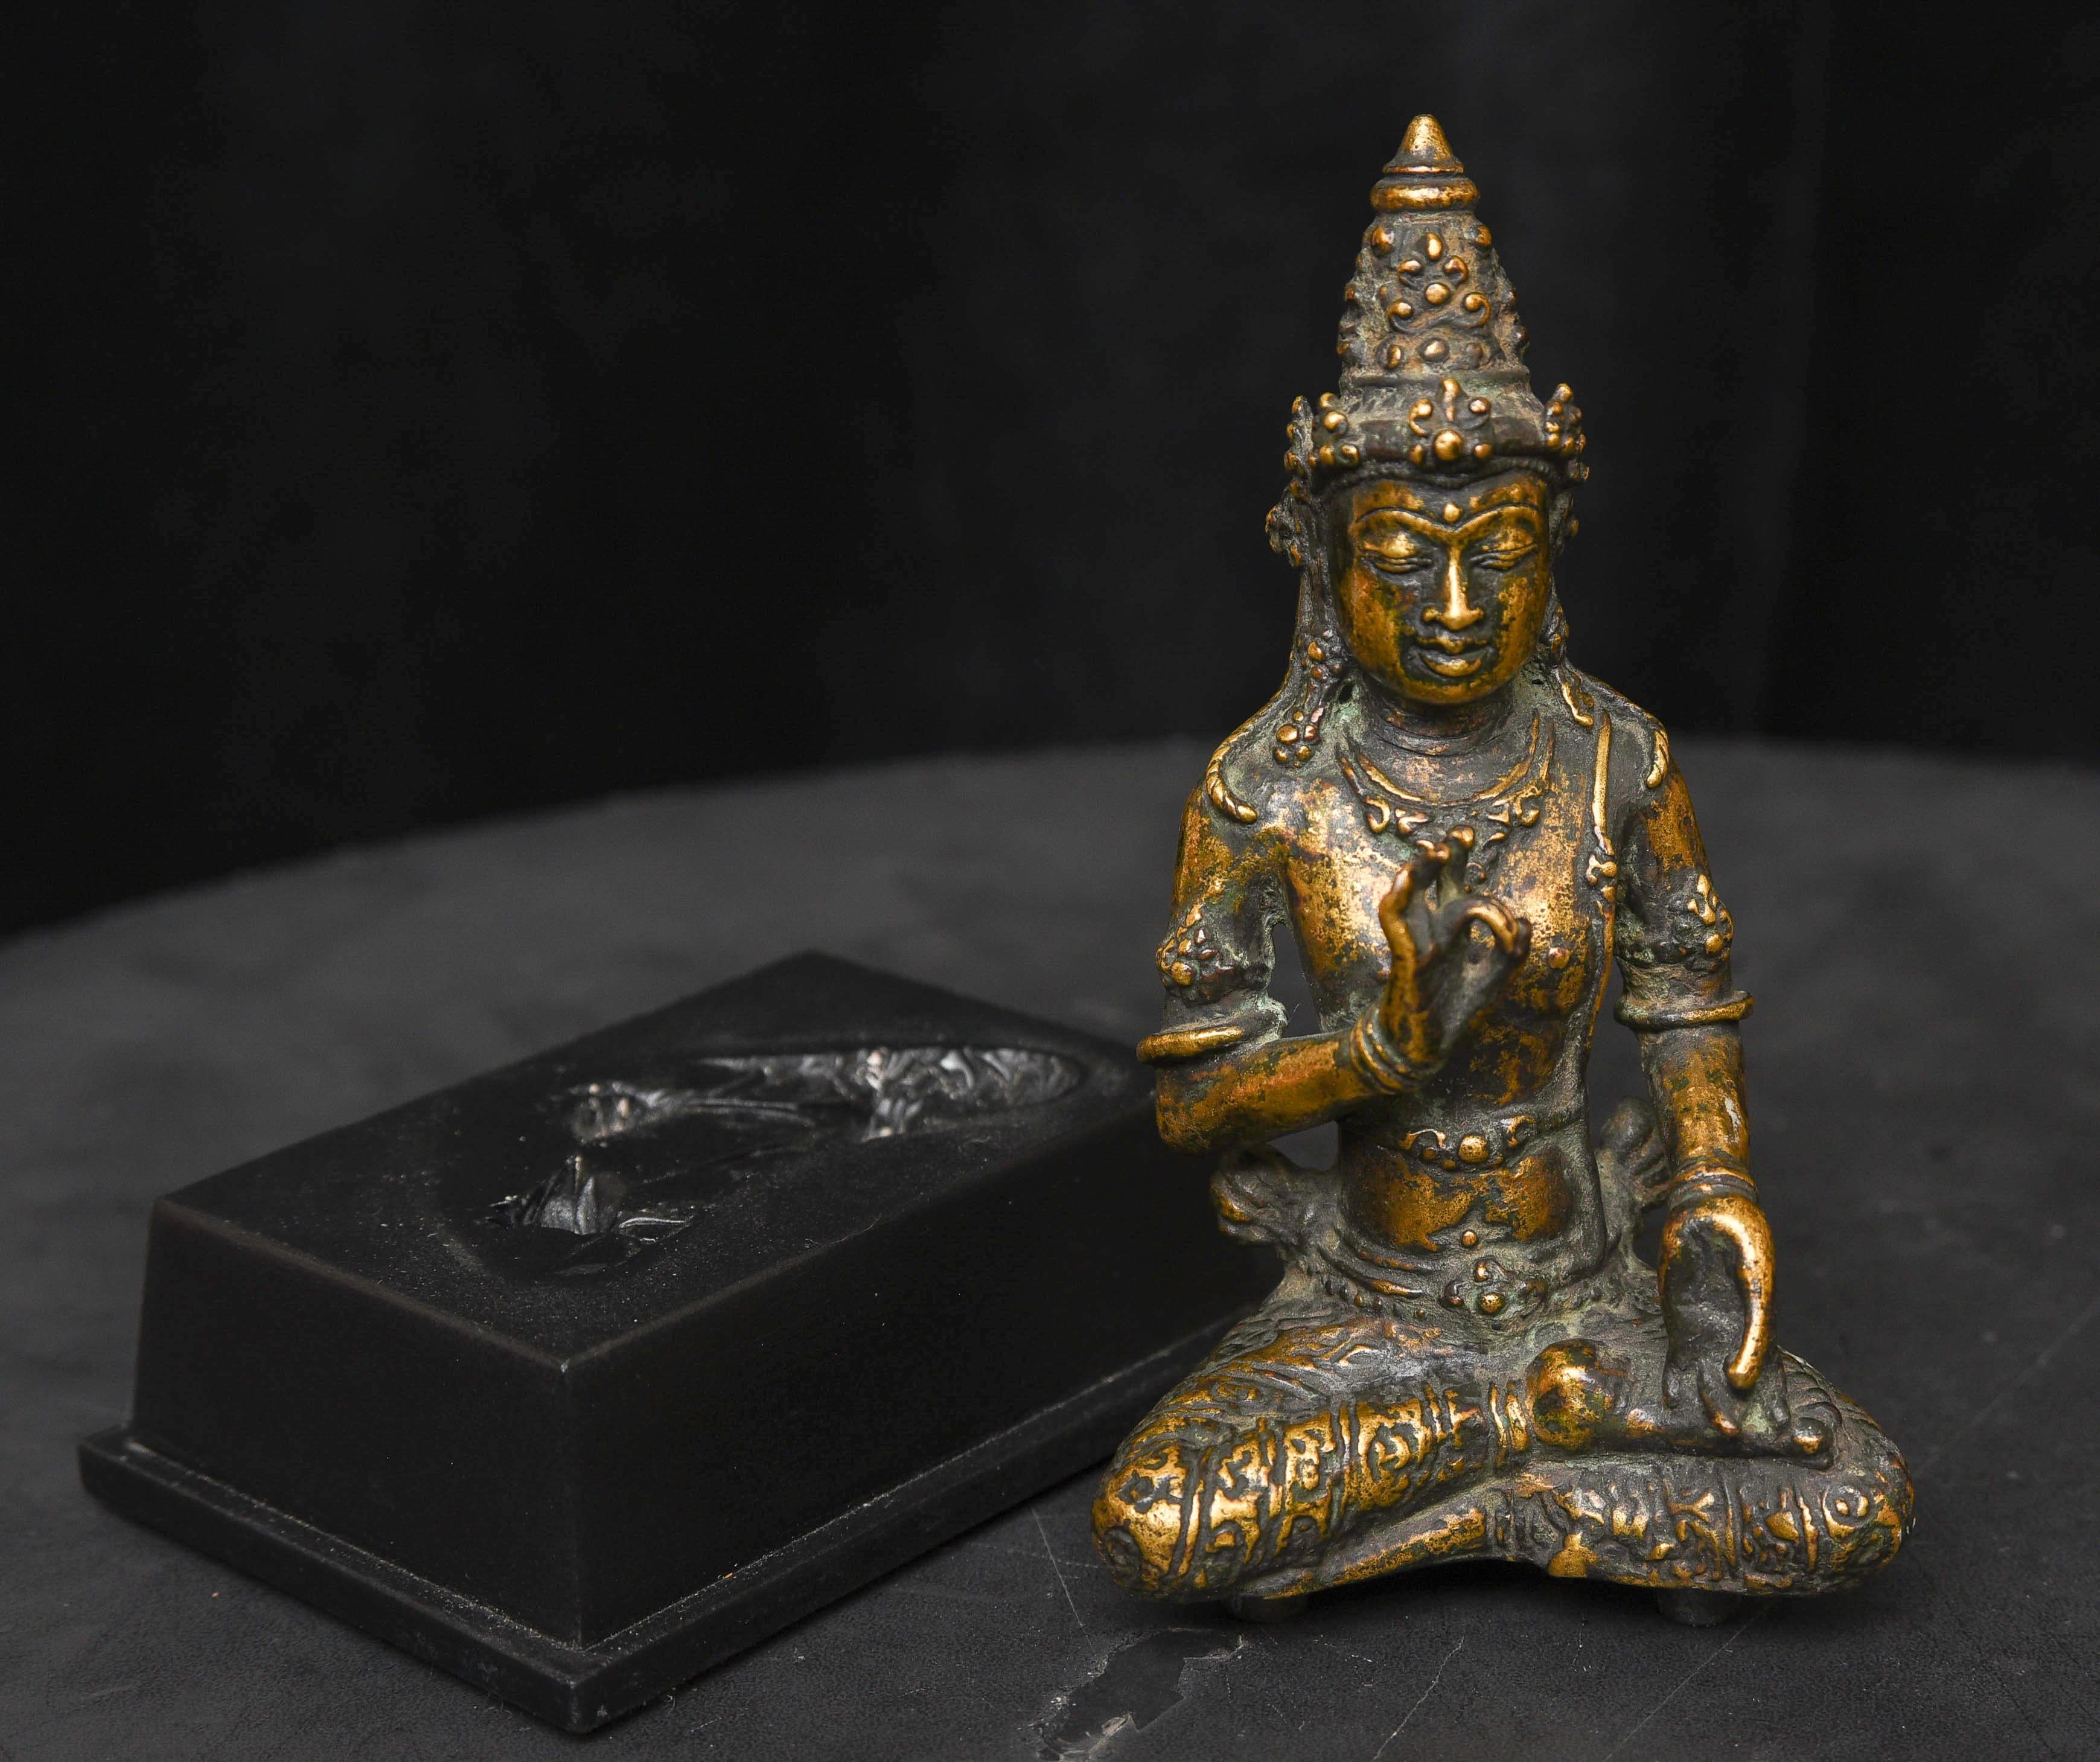 15-19thC Indonesian or Javanese Gilt Bronze Deities - 9591 For Sale 4